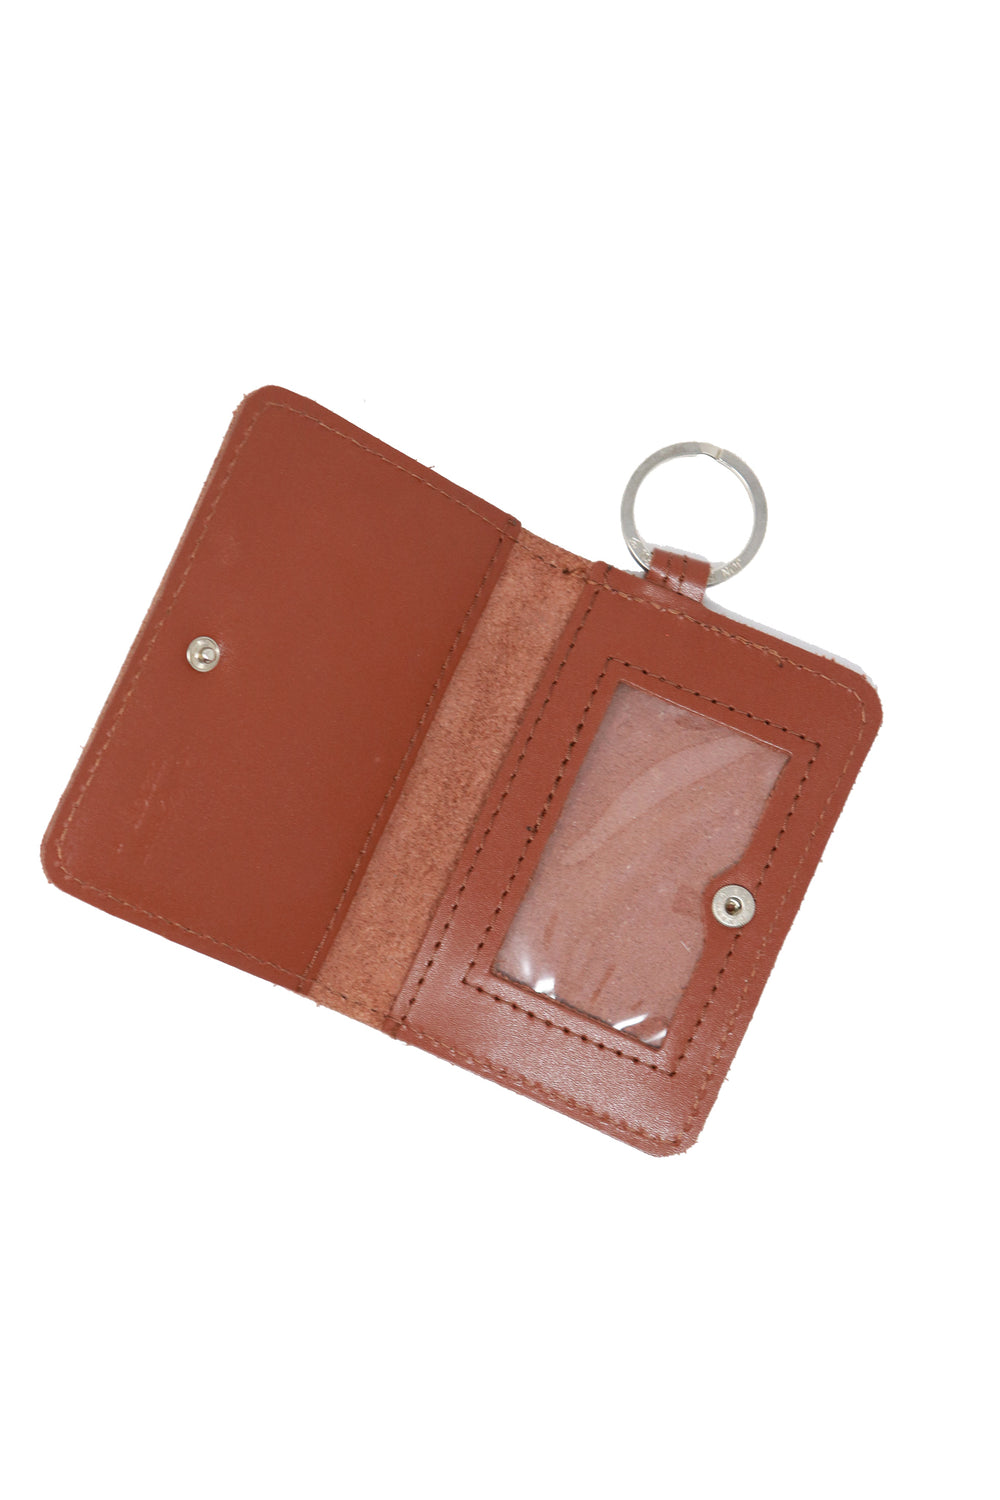 Jon Hart Leather ID Wallet Bridle KD - Gabrielle's Biloxi